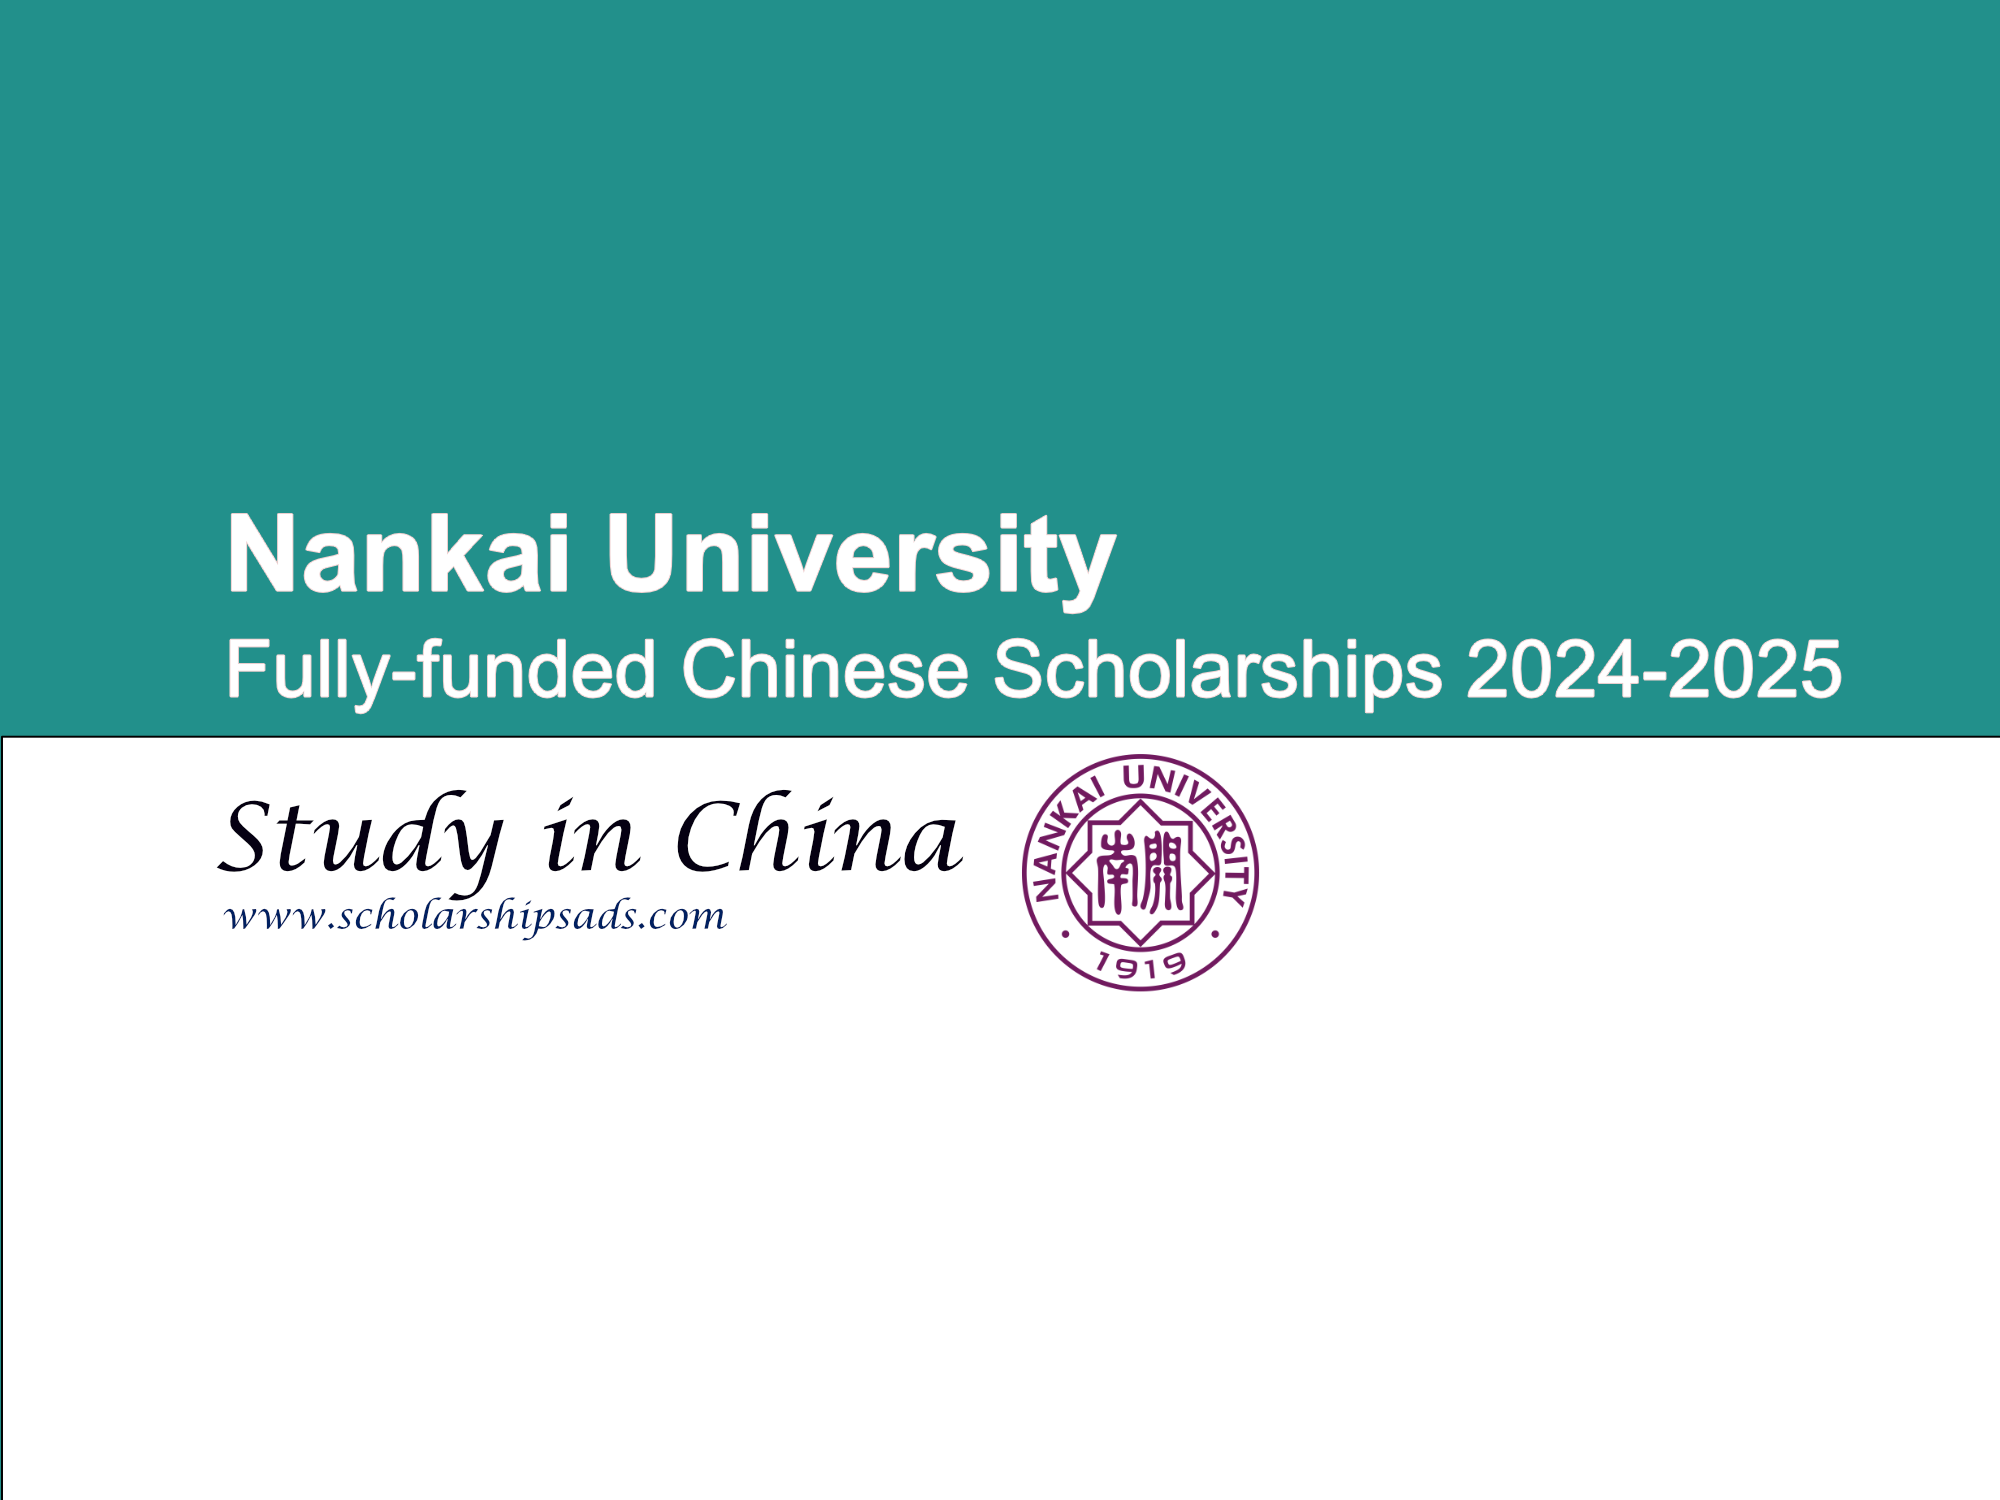 Nankai University Scholarships.